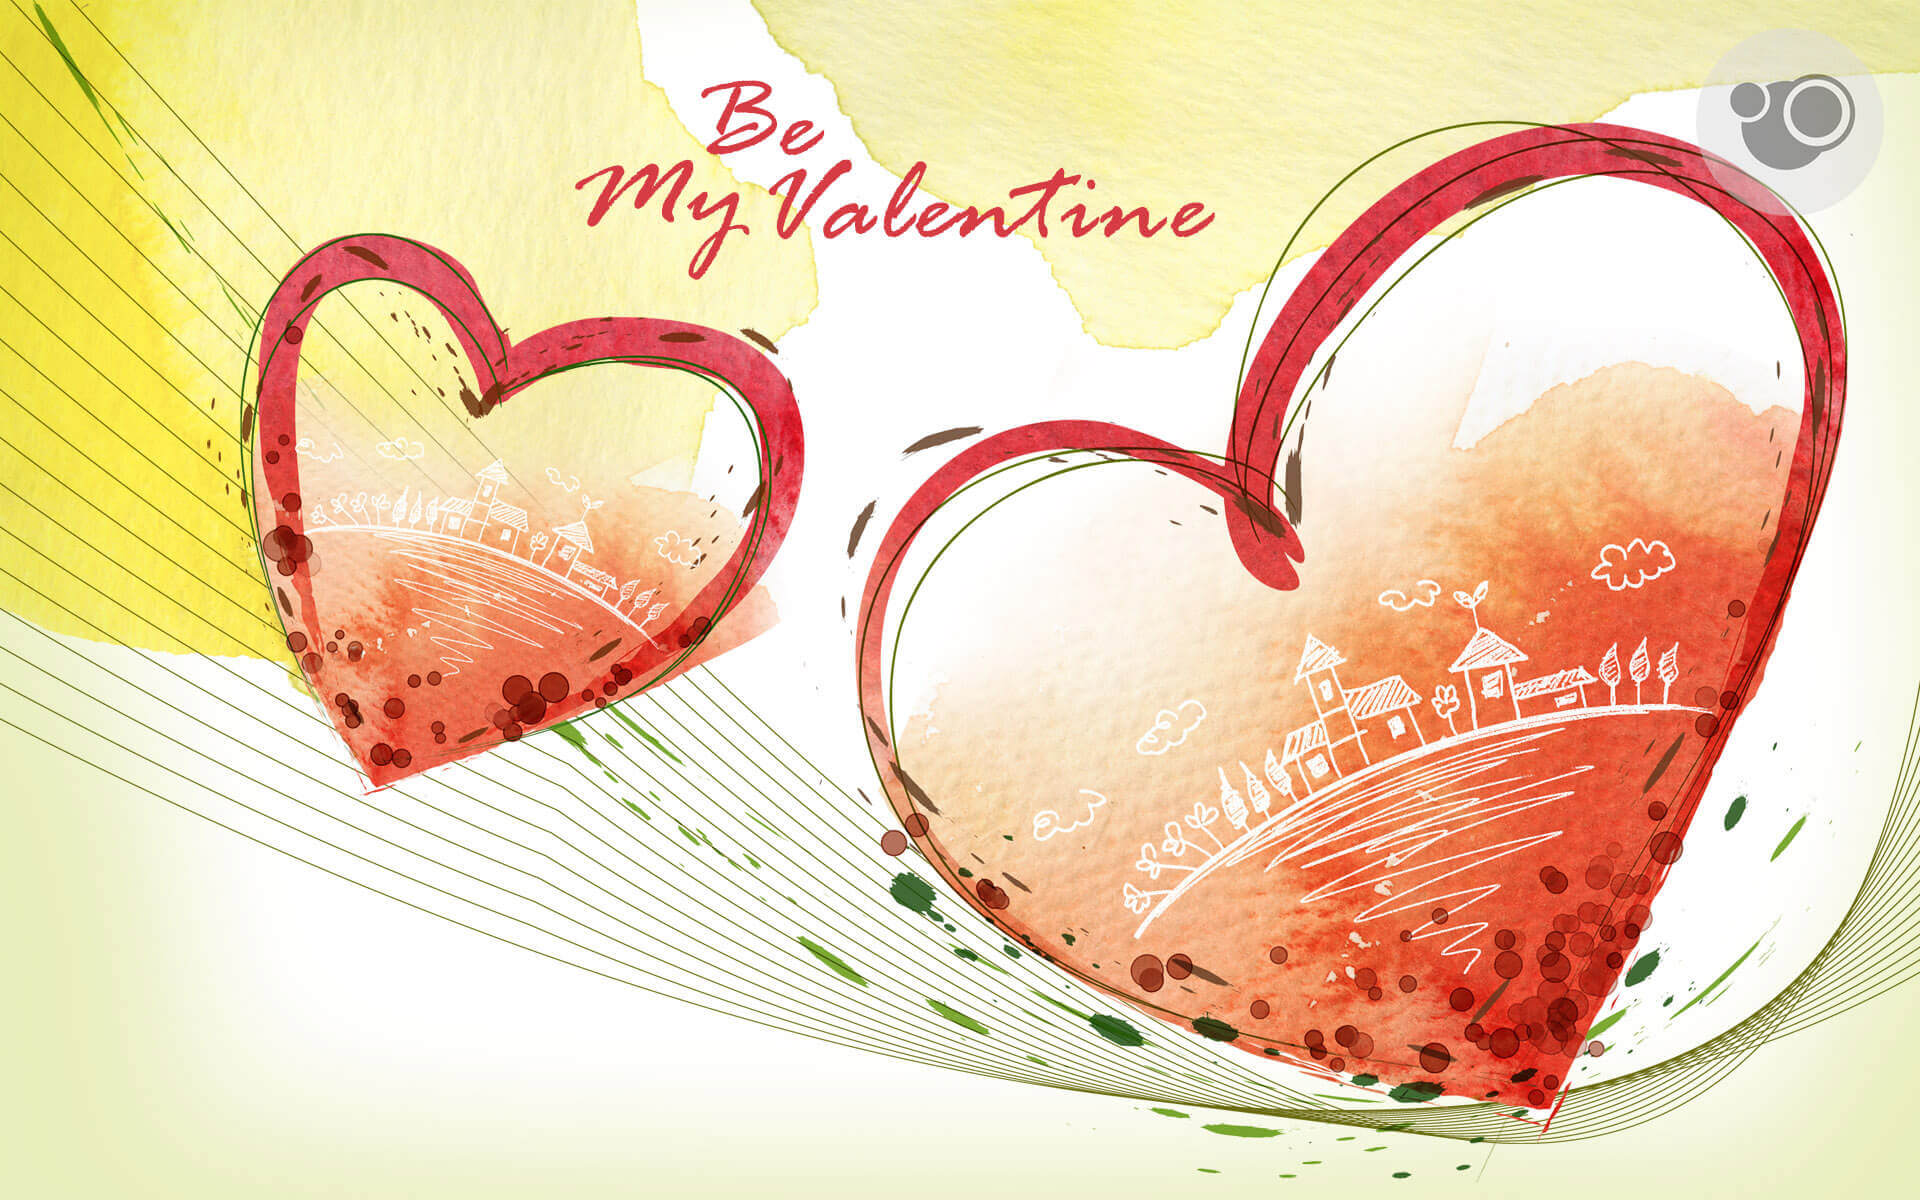 Be-my-valentine-hd-wallpaper-download-free